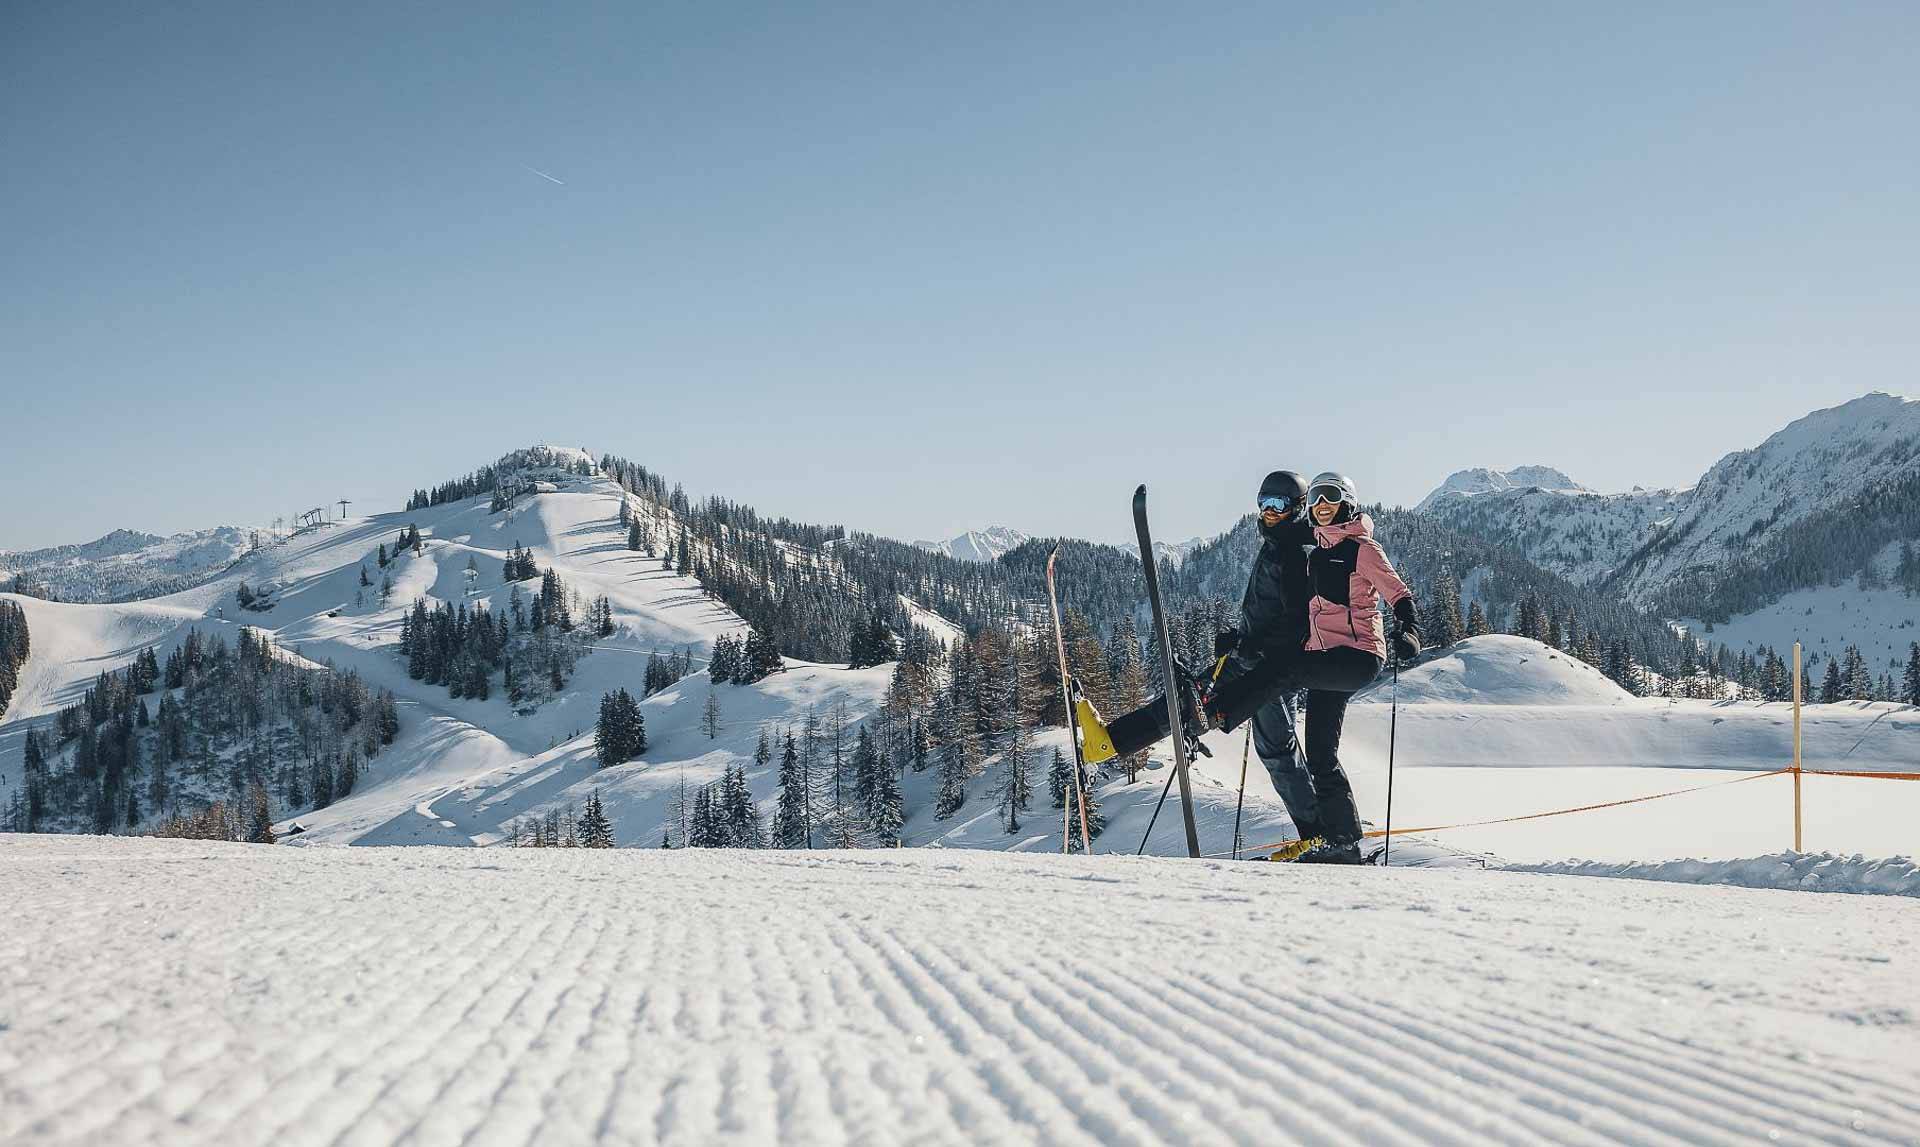 Traum-Skitag in Alpendorf